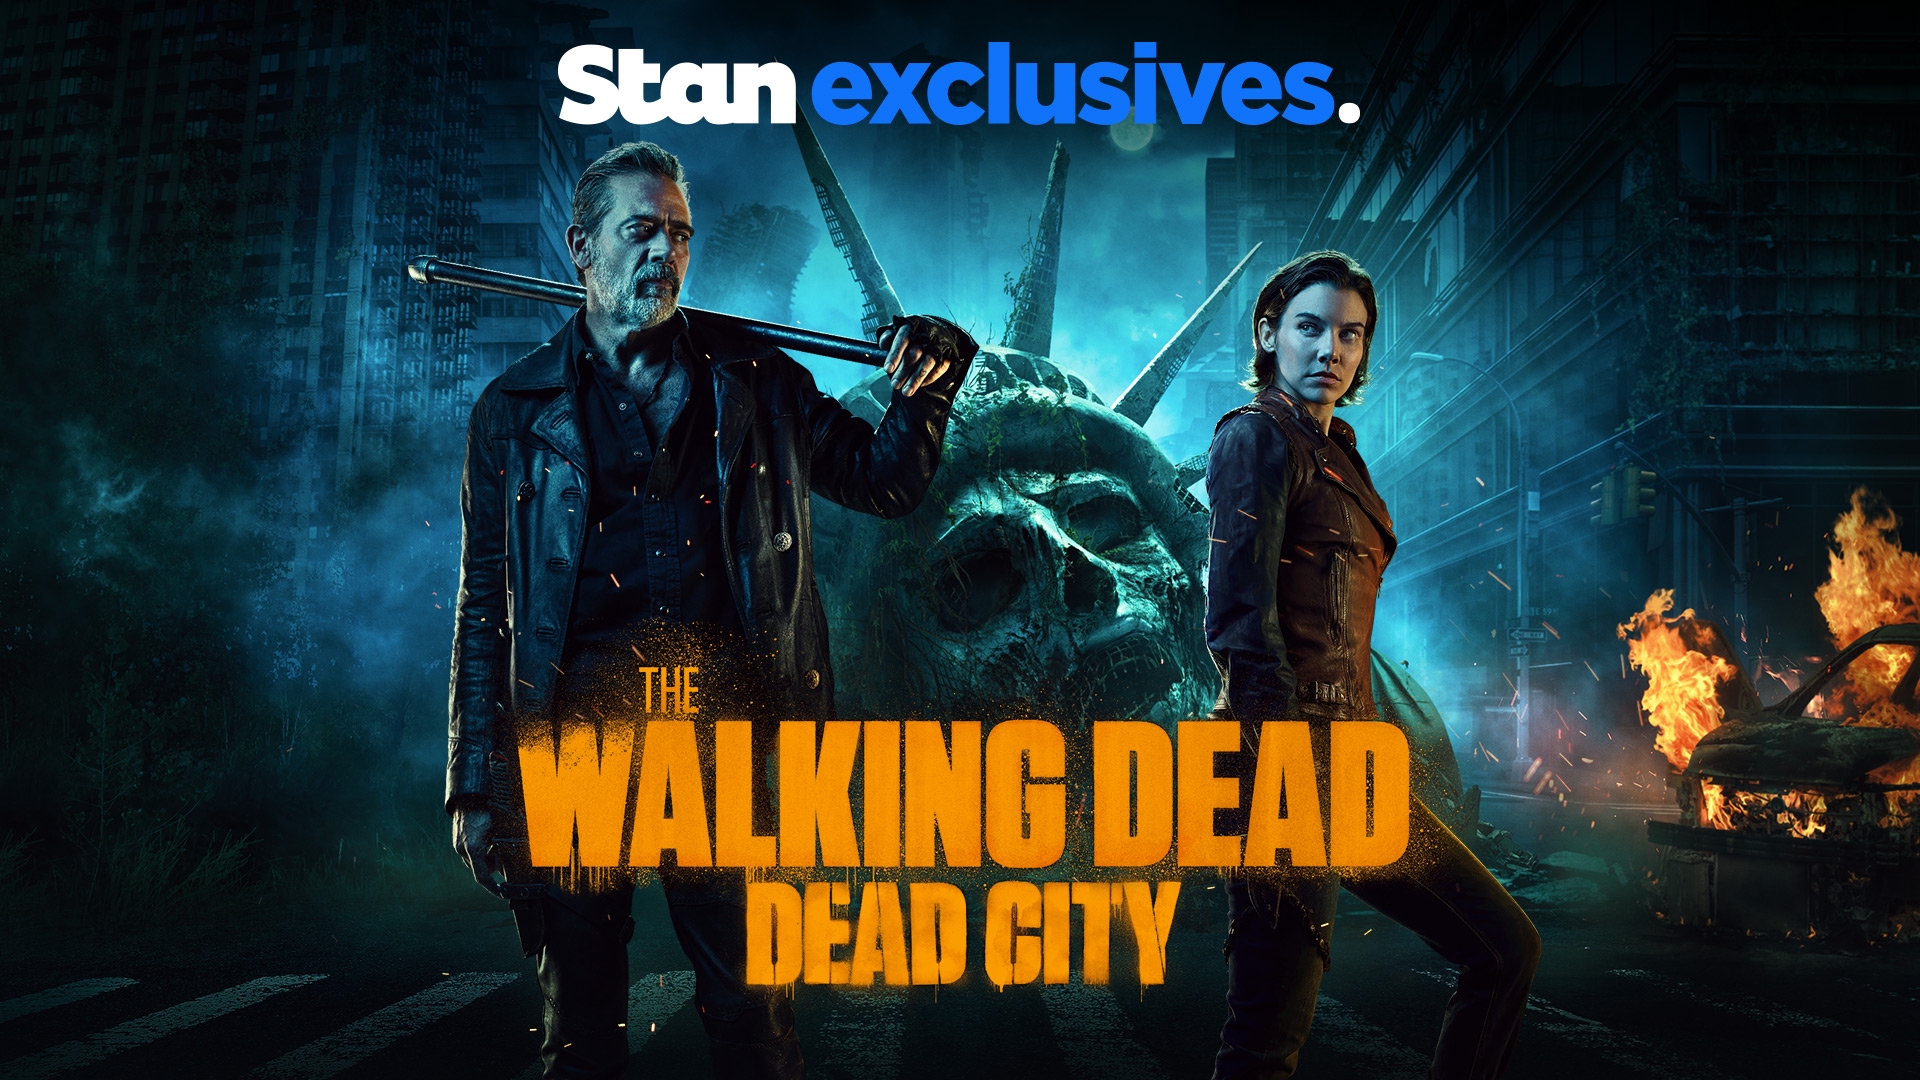 The Walking Dead: Dead City, Now Streaming